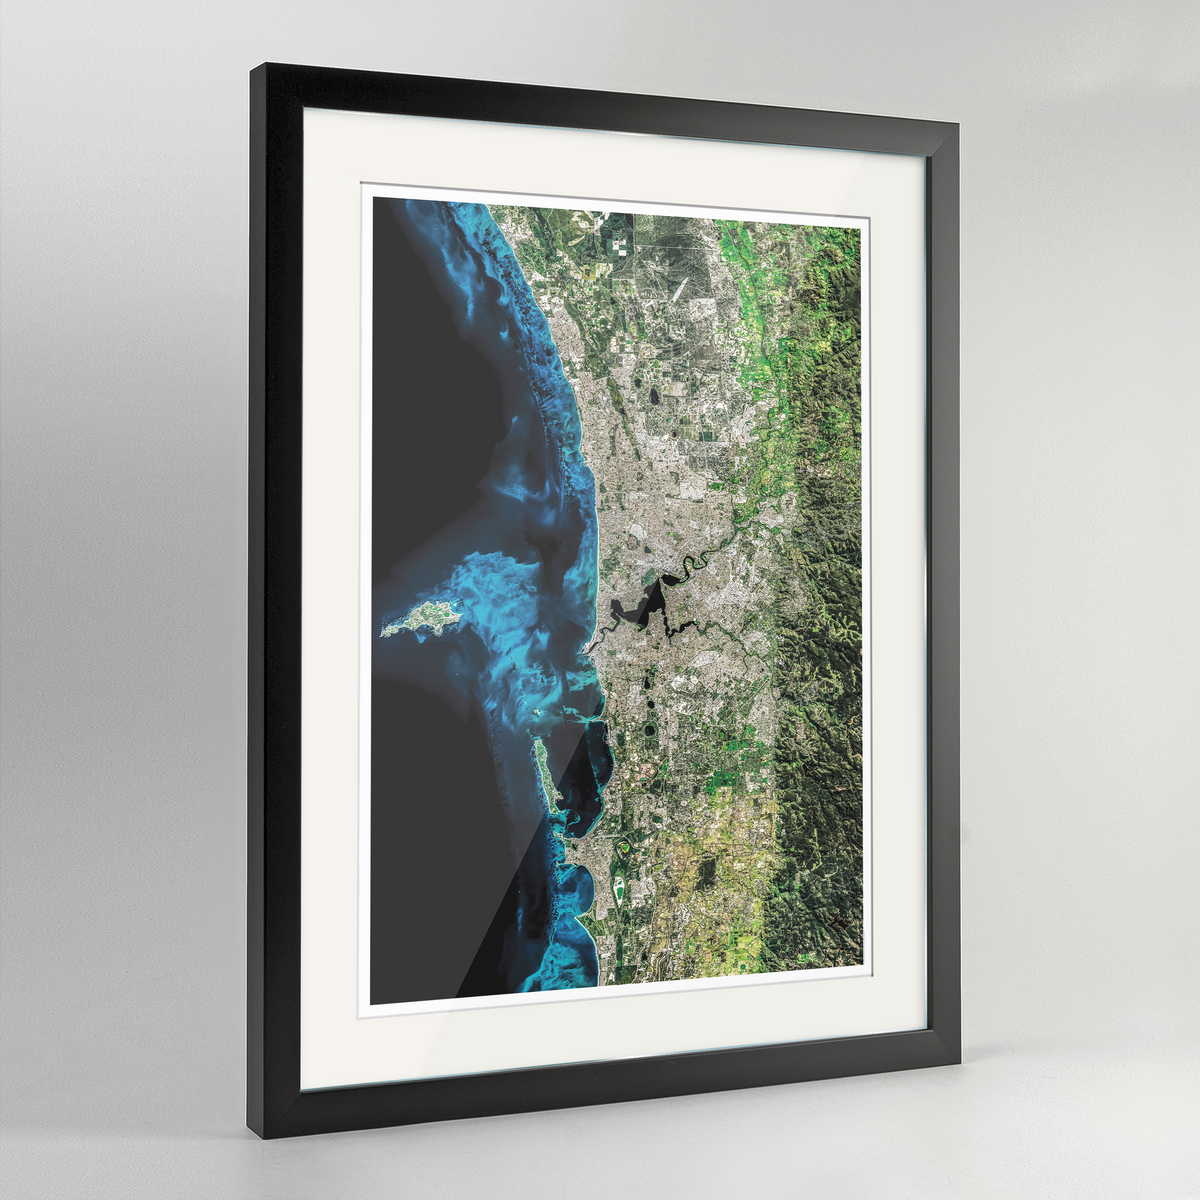 Perth Earth Photography Art Print - Framed